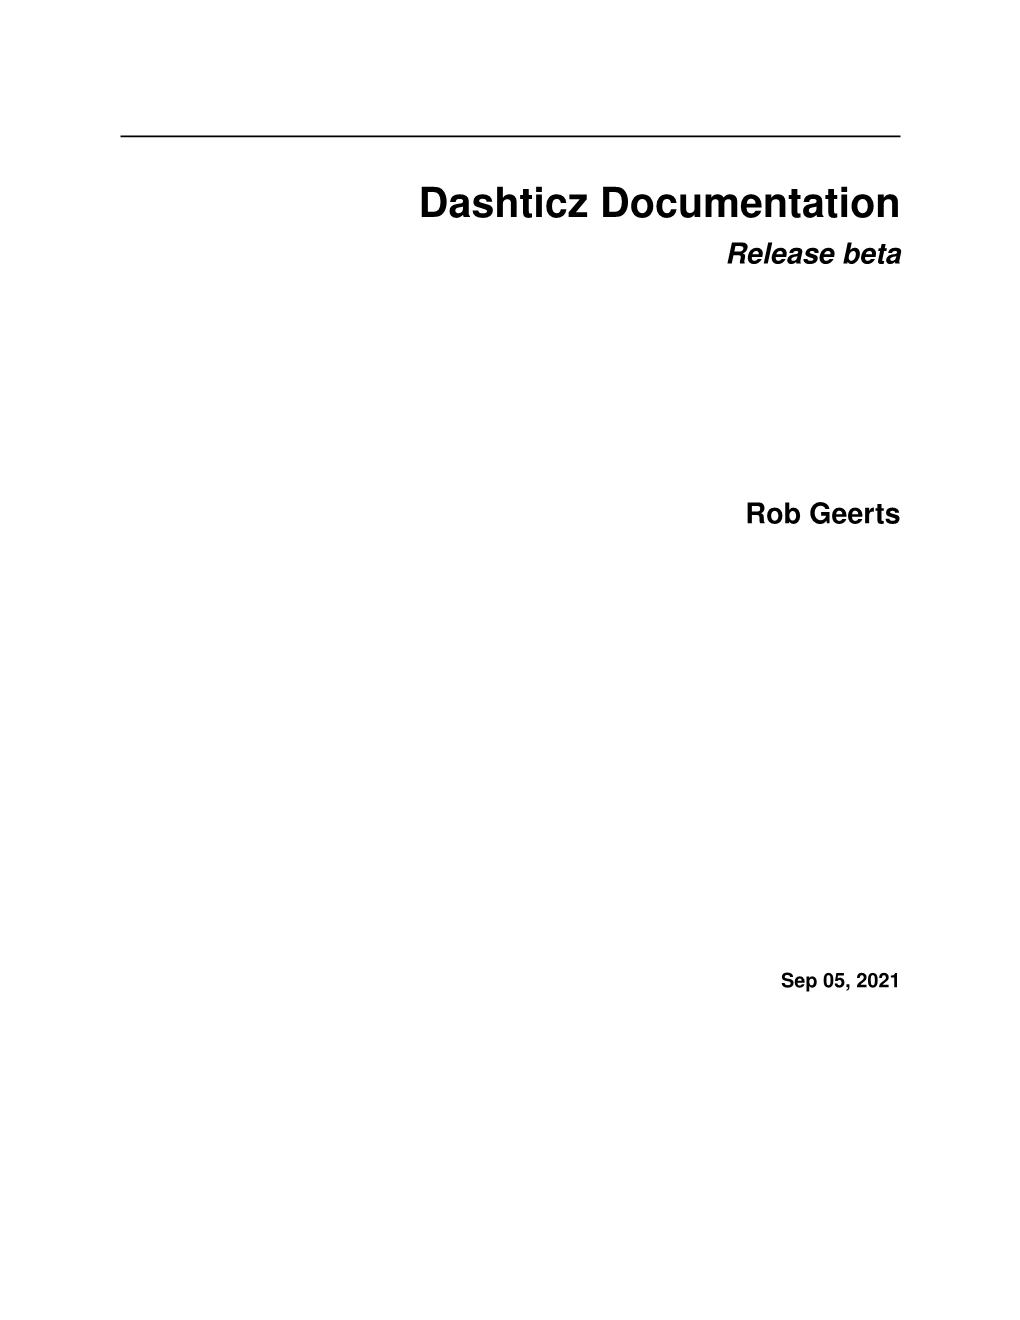 Dashticz Documentation Release Beta